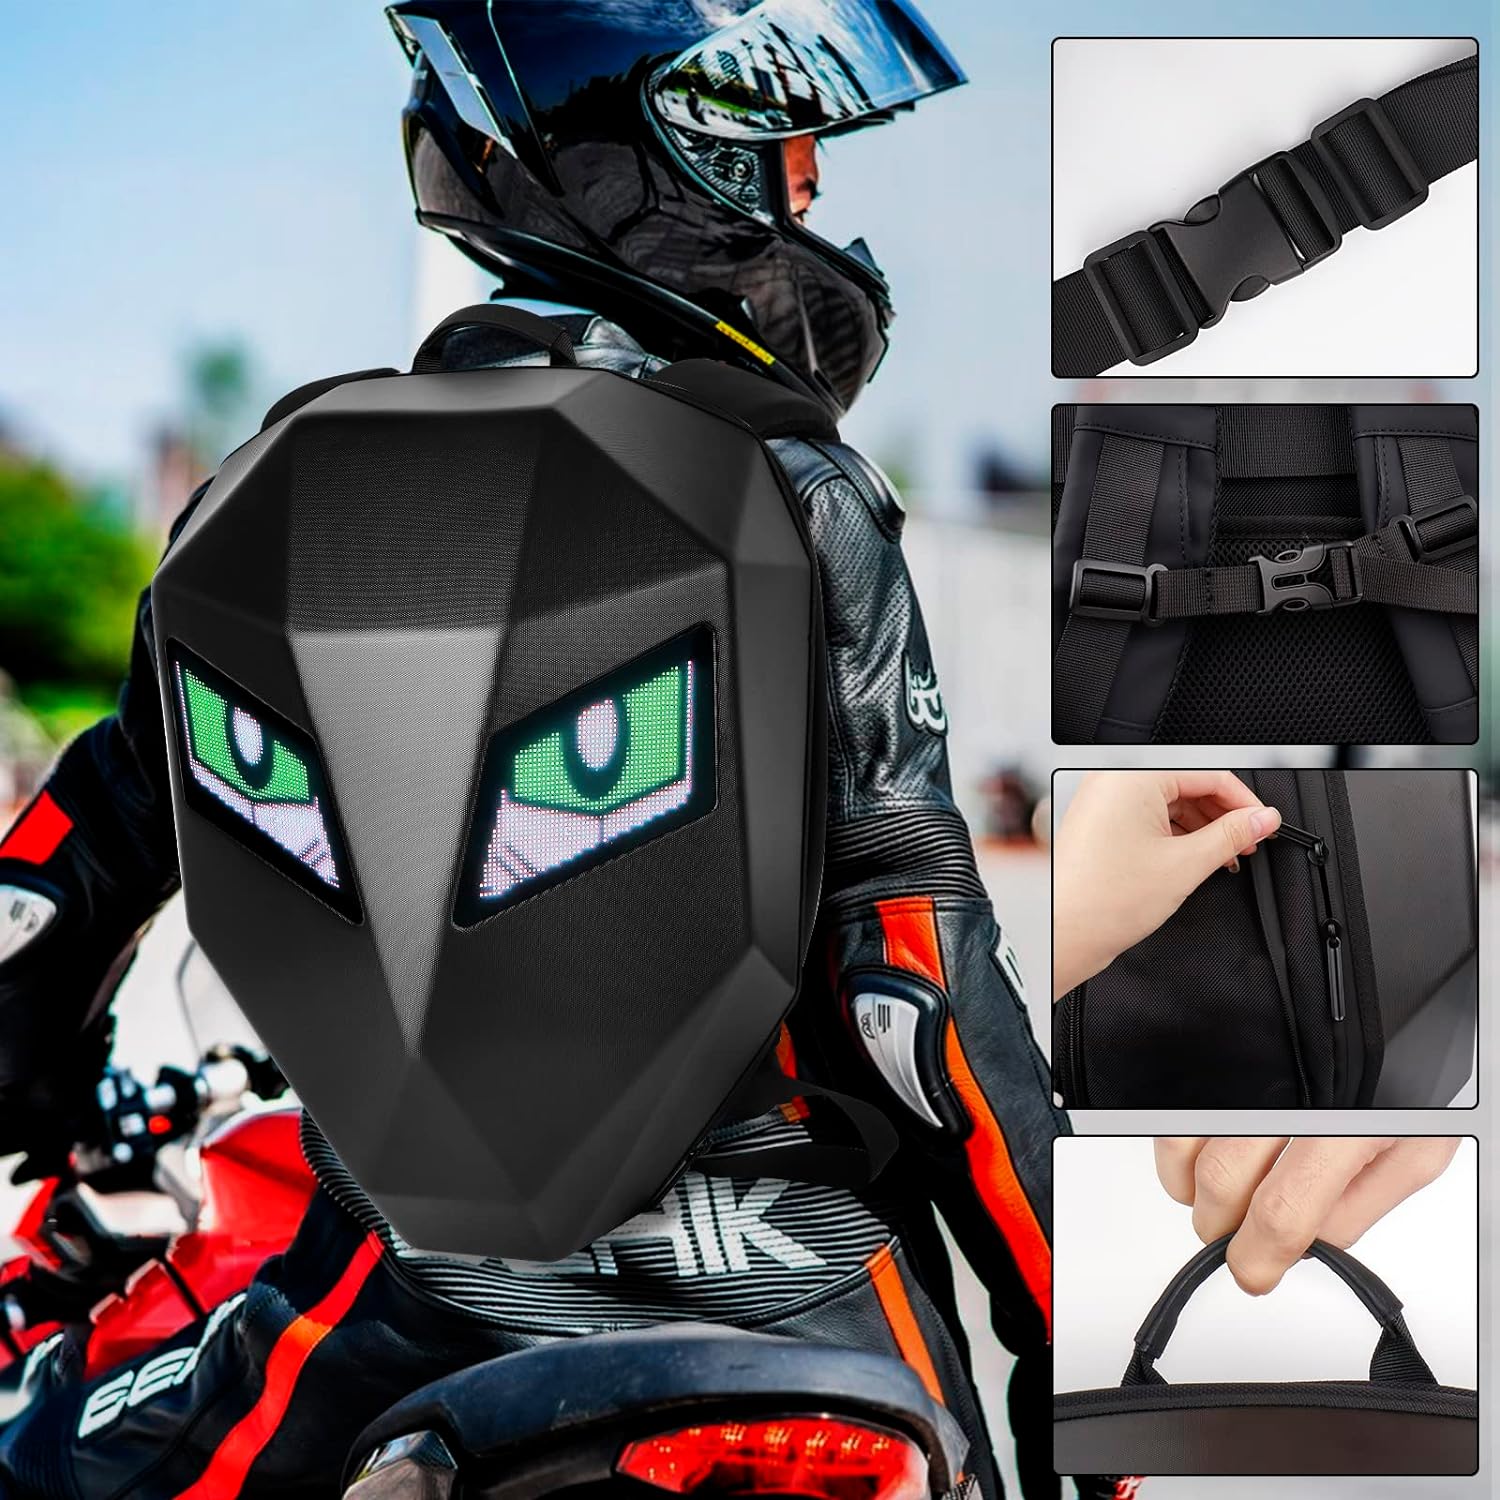 LED Motorcycle Backpack